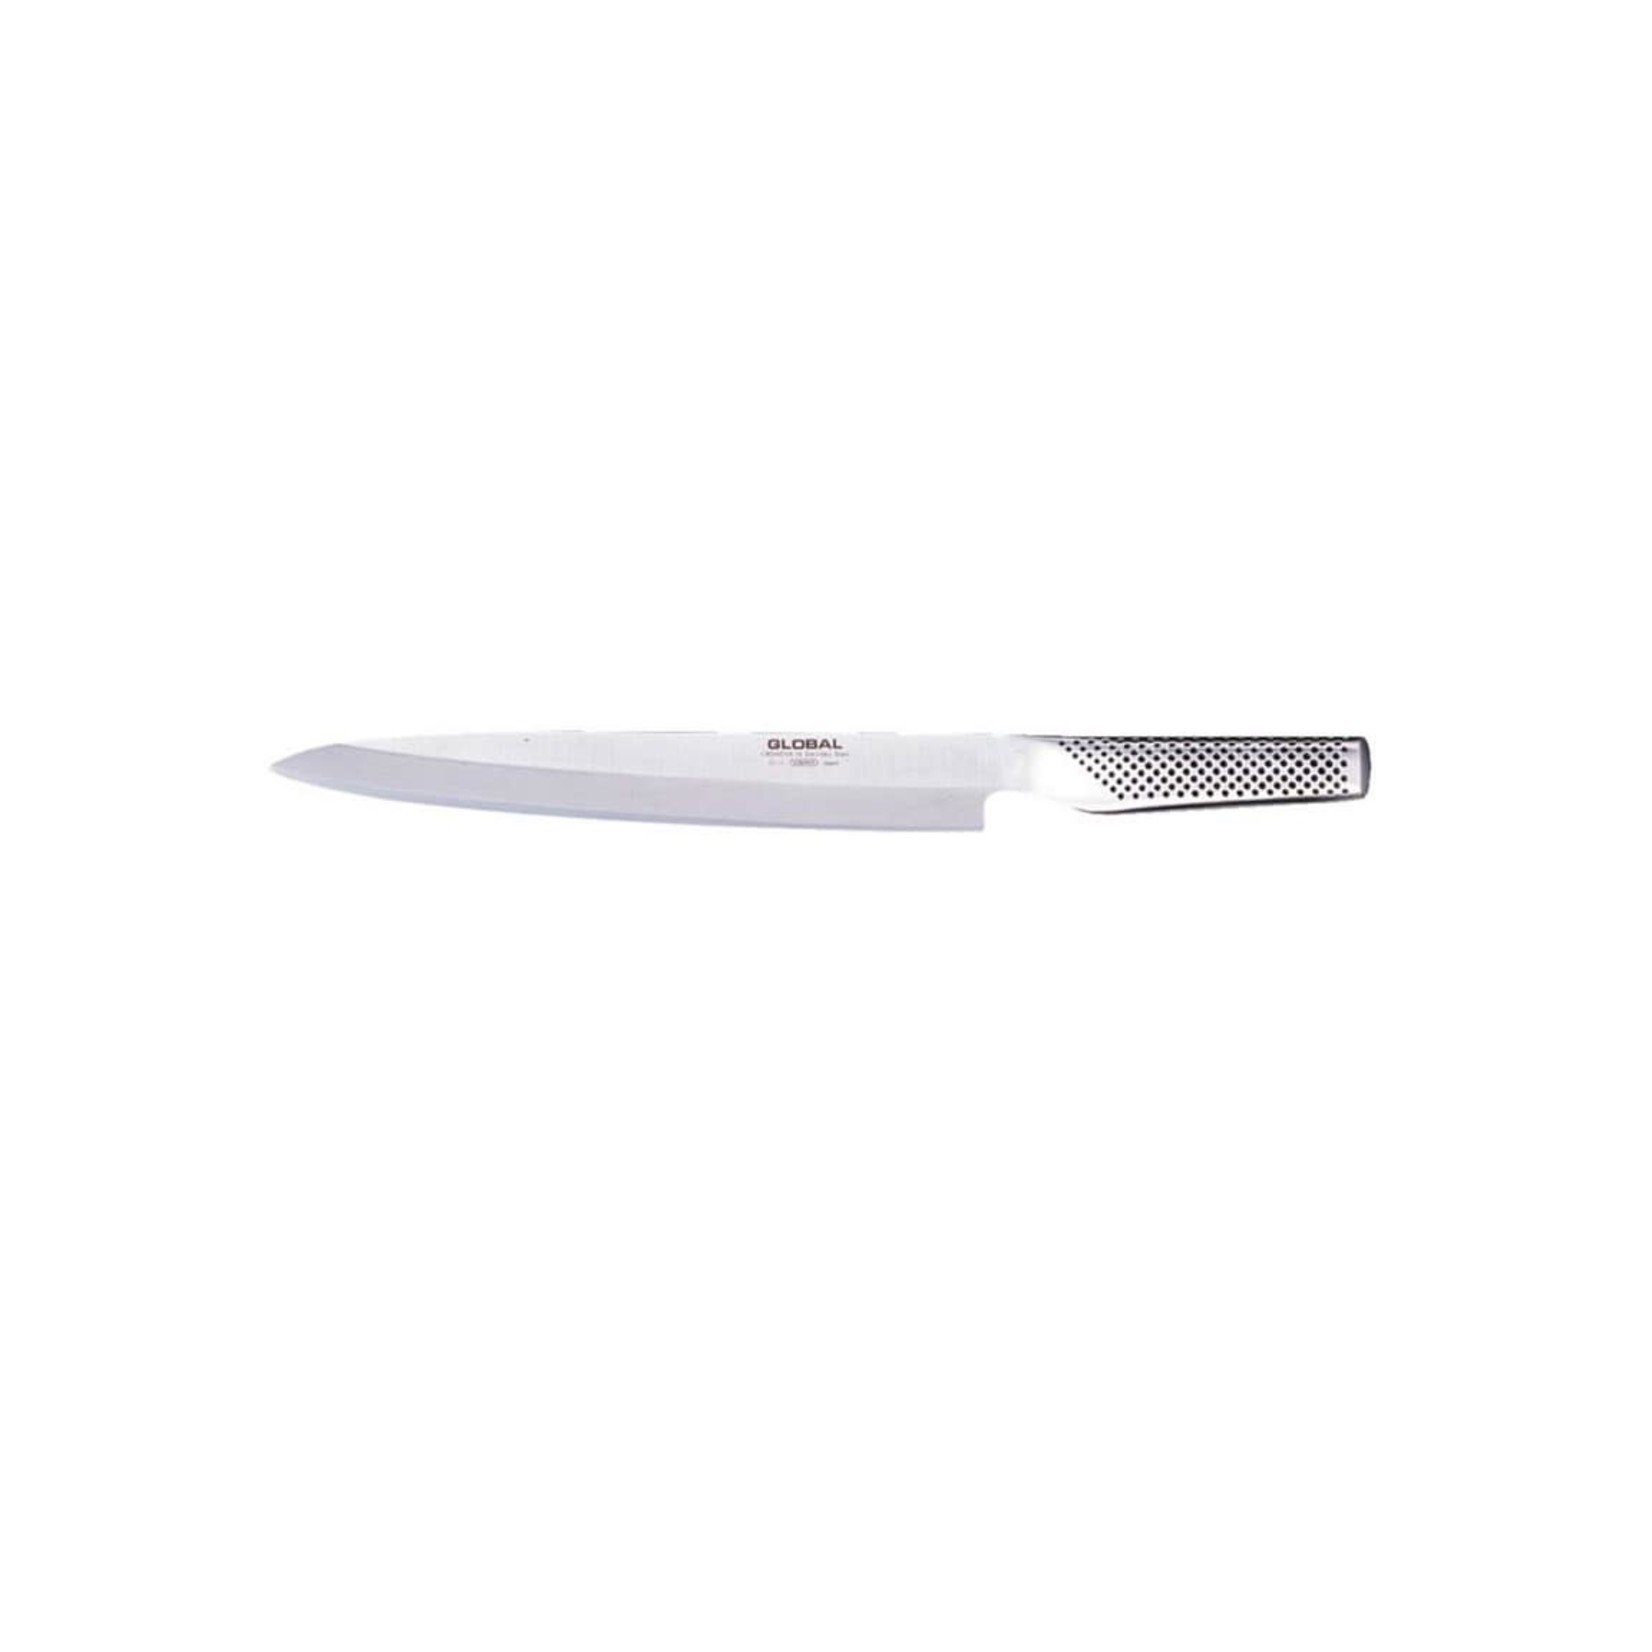 GLOBAL GLOBAL Sashimi Knife G11 25cm